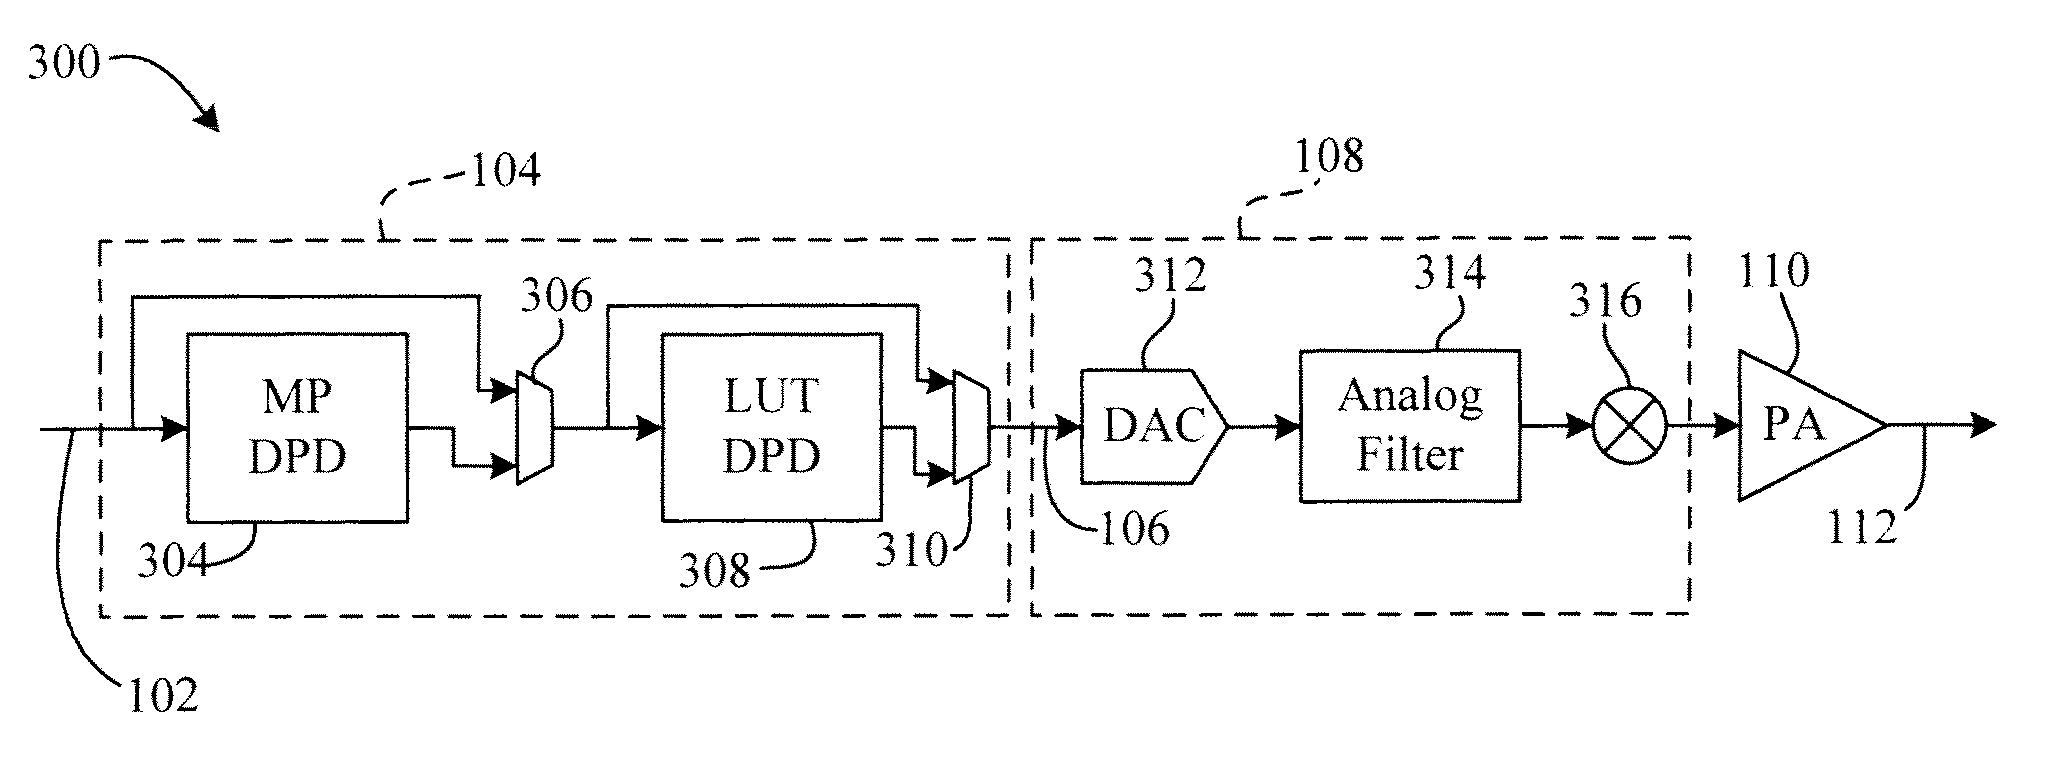 Power amplifier system including a composite digital predistorter